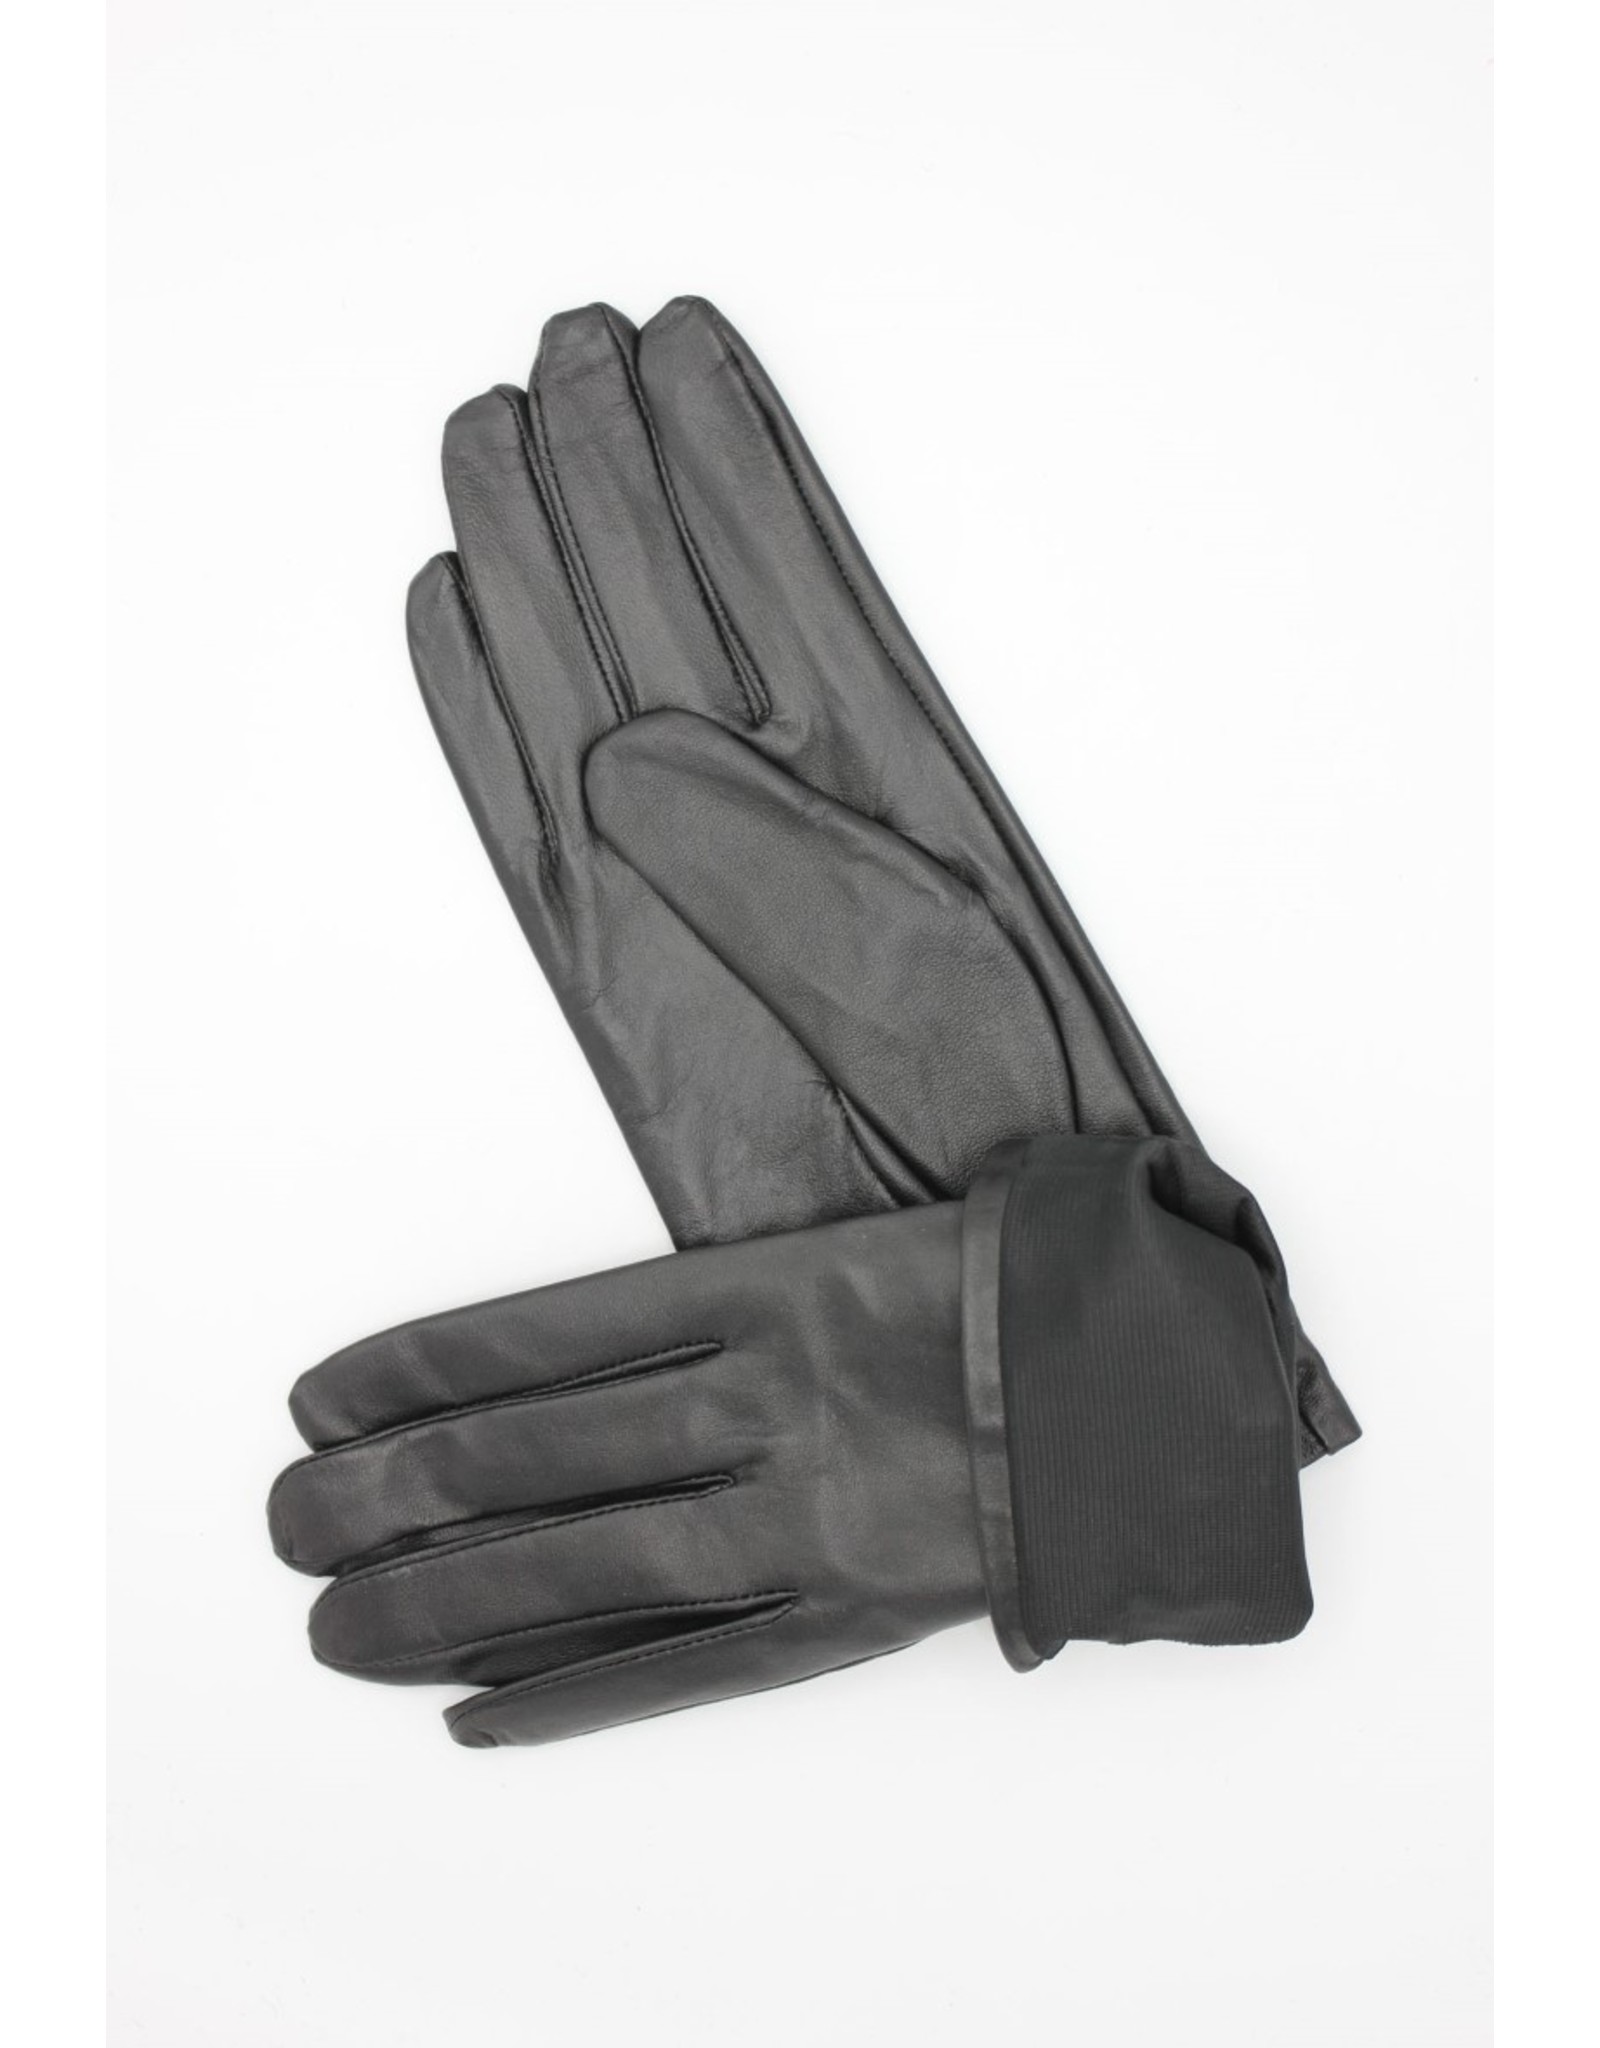 PARIS ES'TYL HA11-Sheepskin Leather Gloves Lined